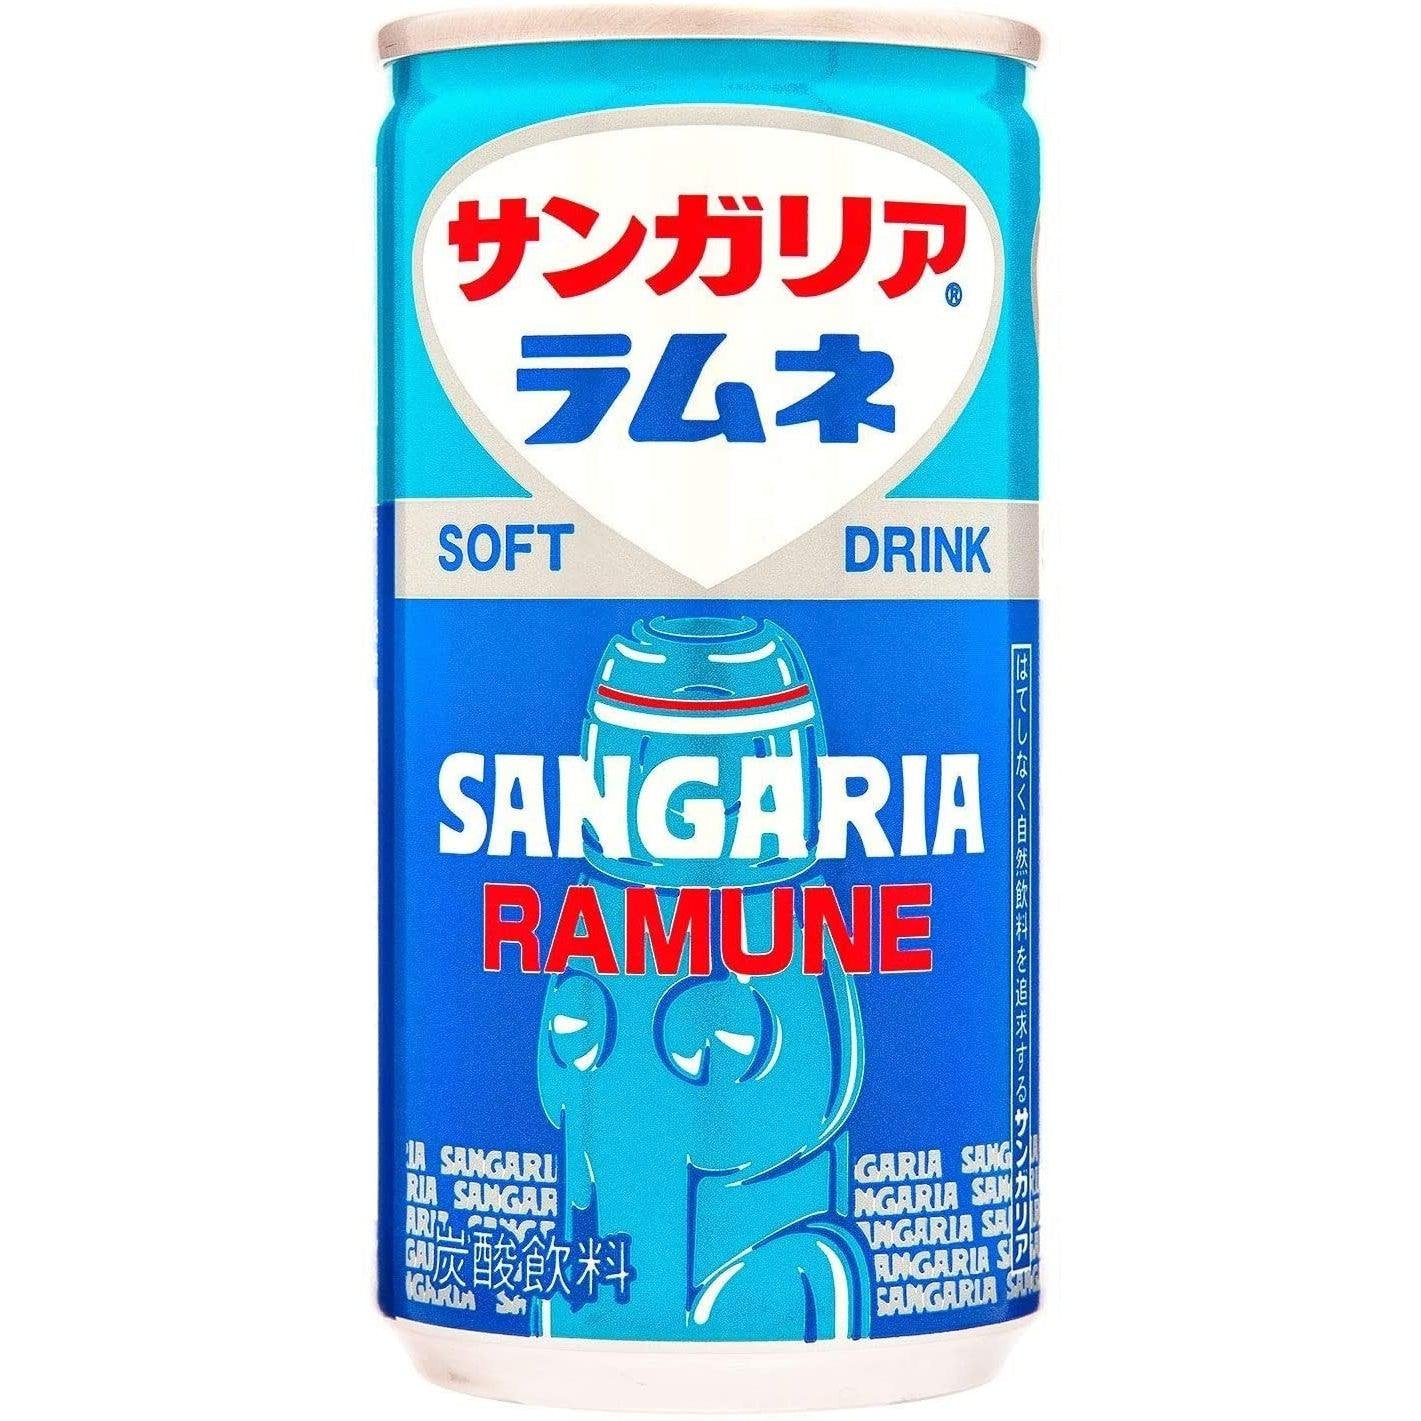 Sangaria Ramune Soda Japanese Soda Pop Drink 190g (Box of 30 Cans)